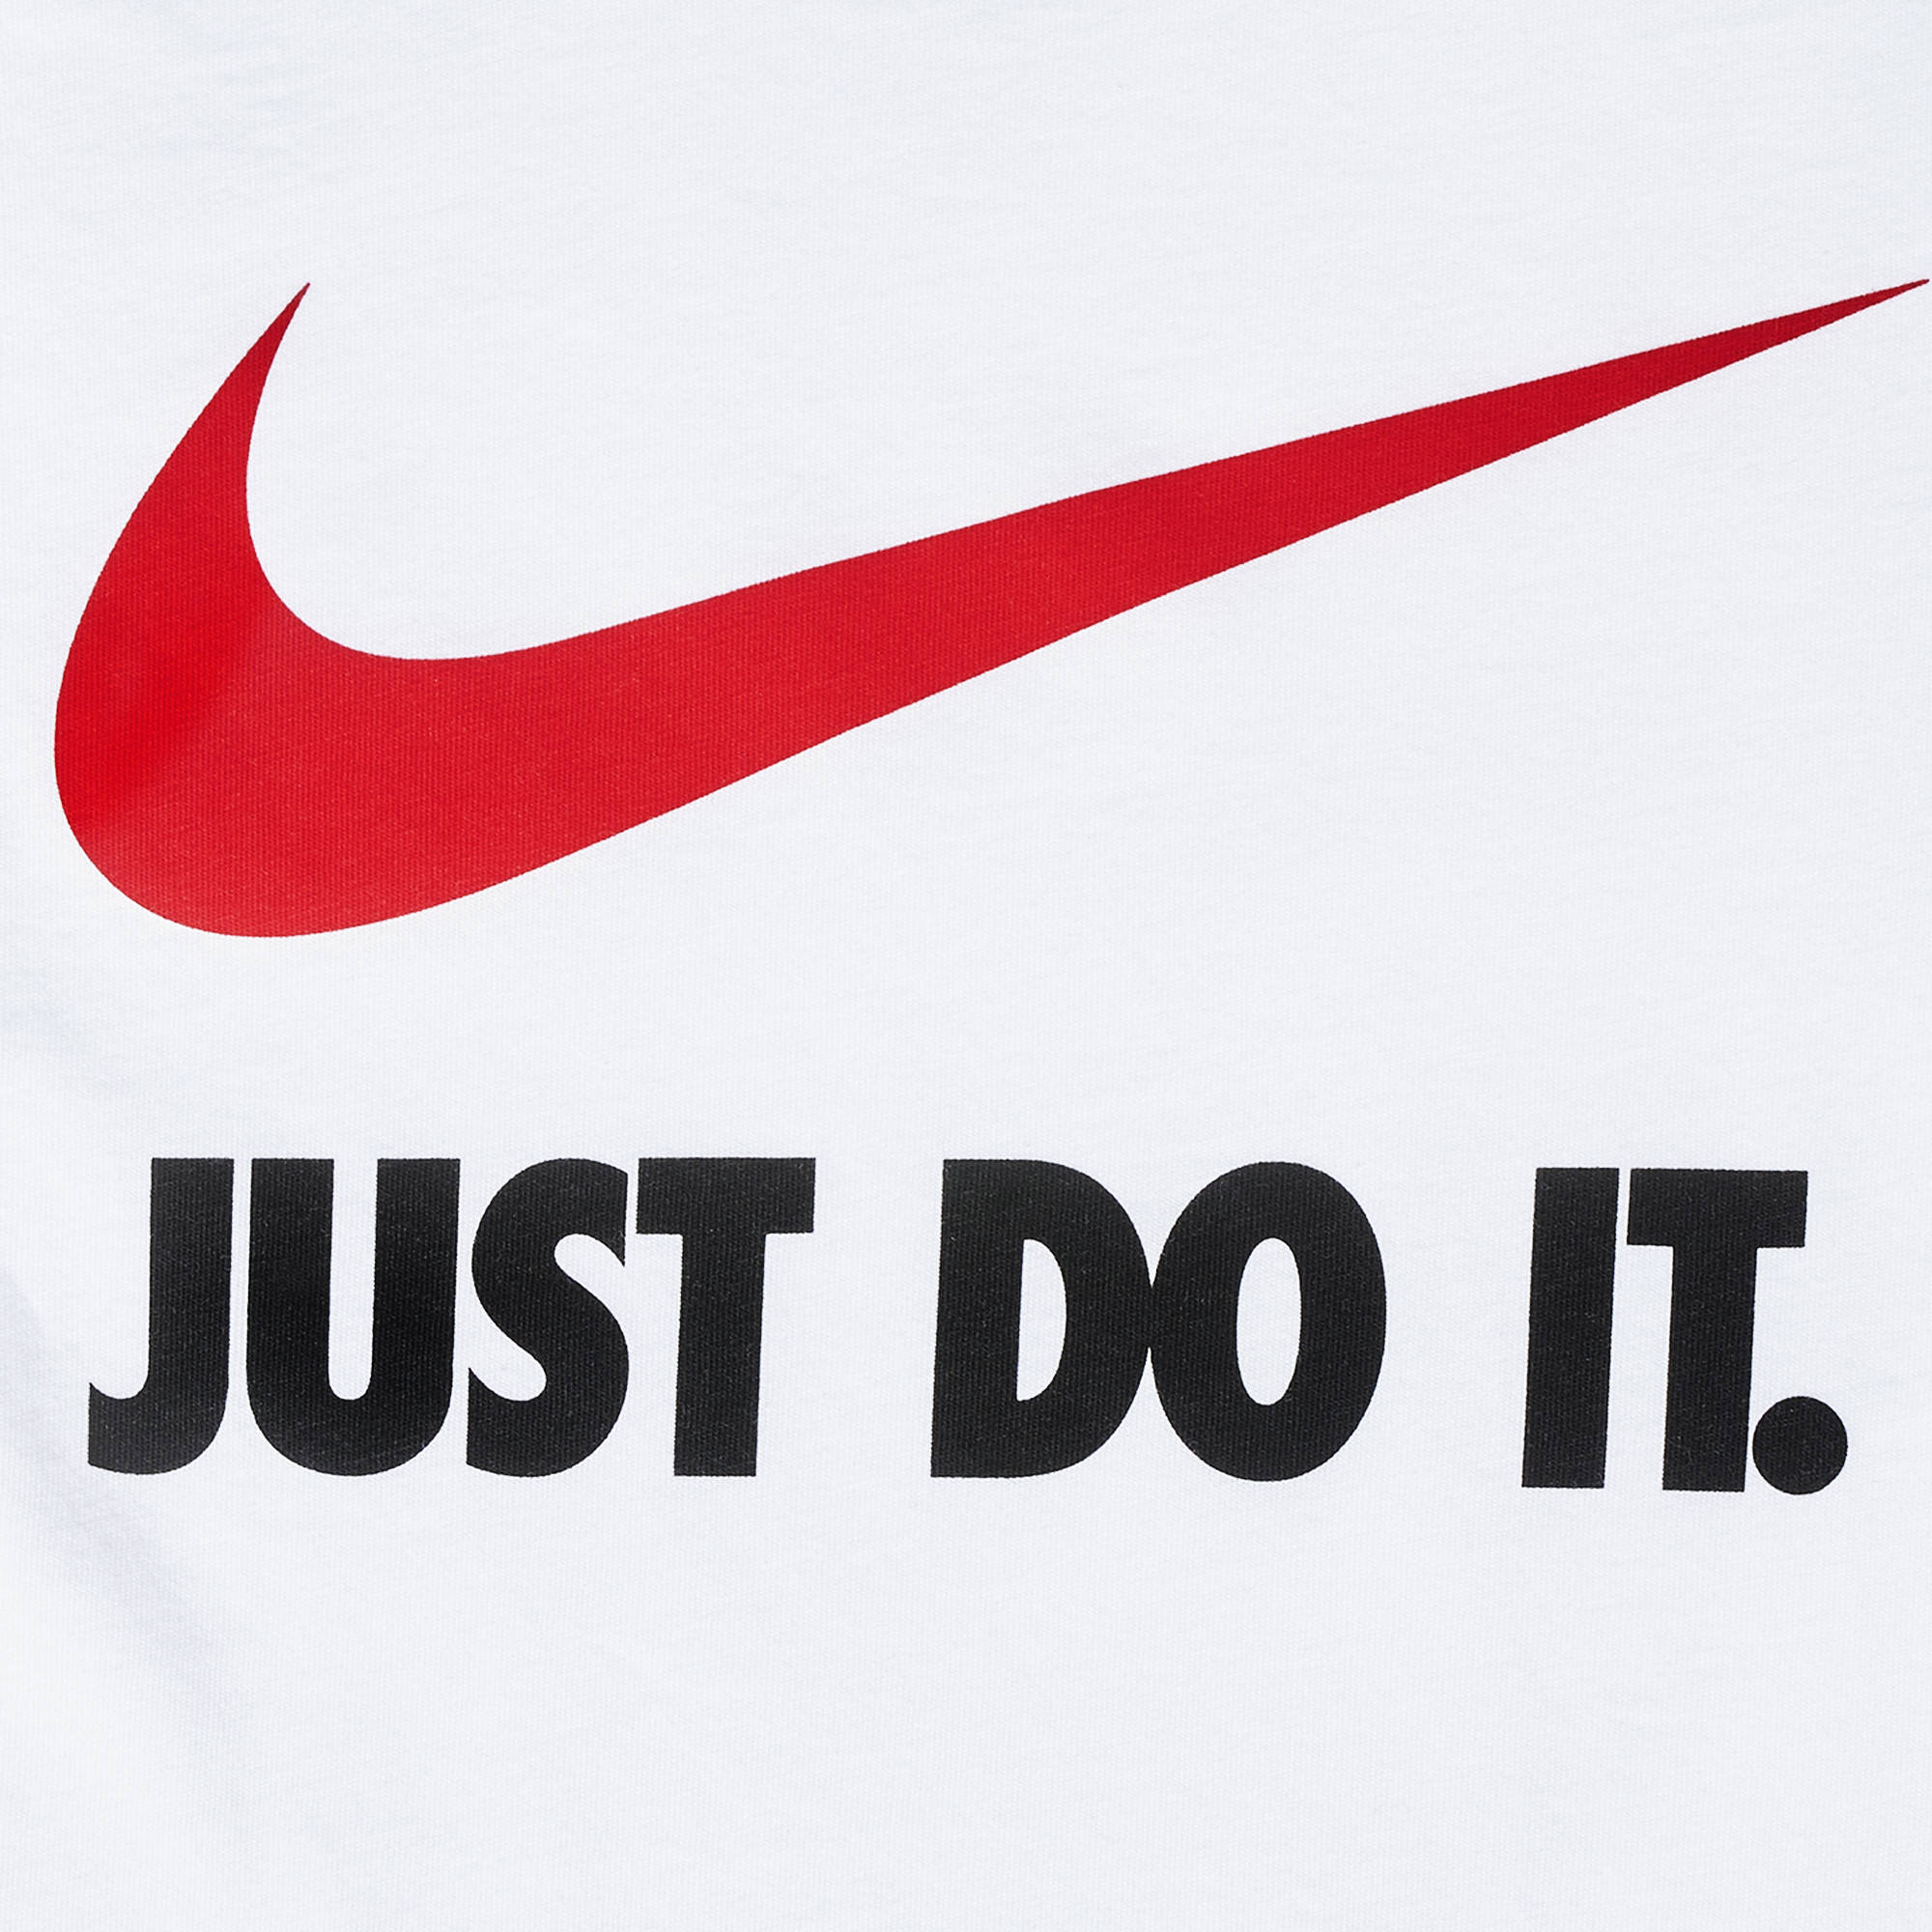 Just do it слоган. Найк Джаст Ду ИТ. Логотип Nike just do it. Слоган найк just do it. Слоган найк just do.